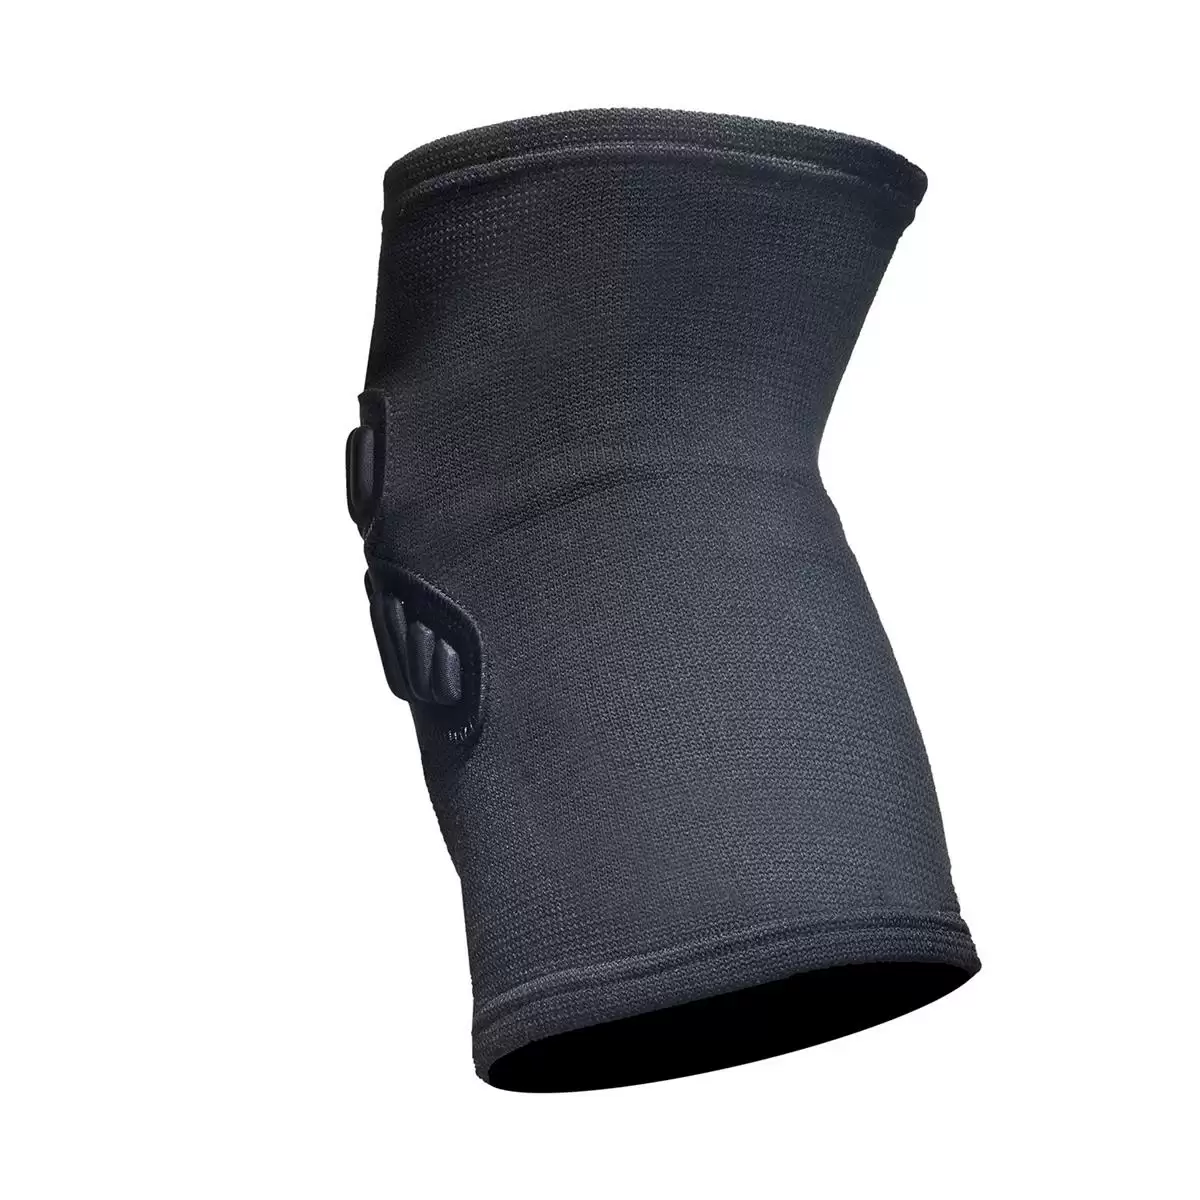 Sleeve 3D Knee guards Black Size XL #1